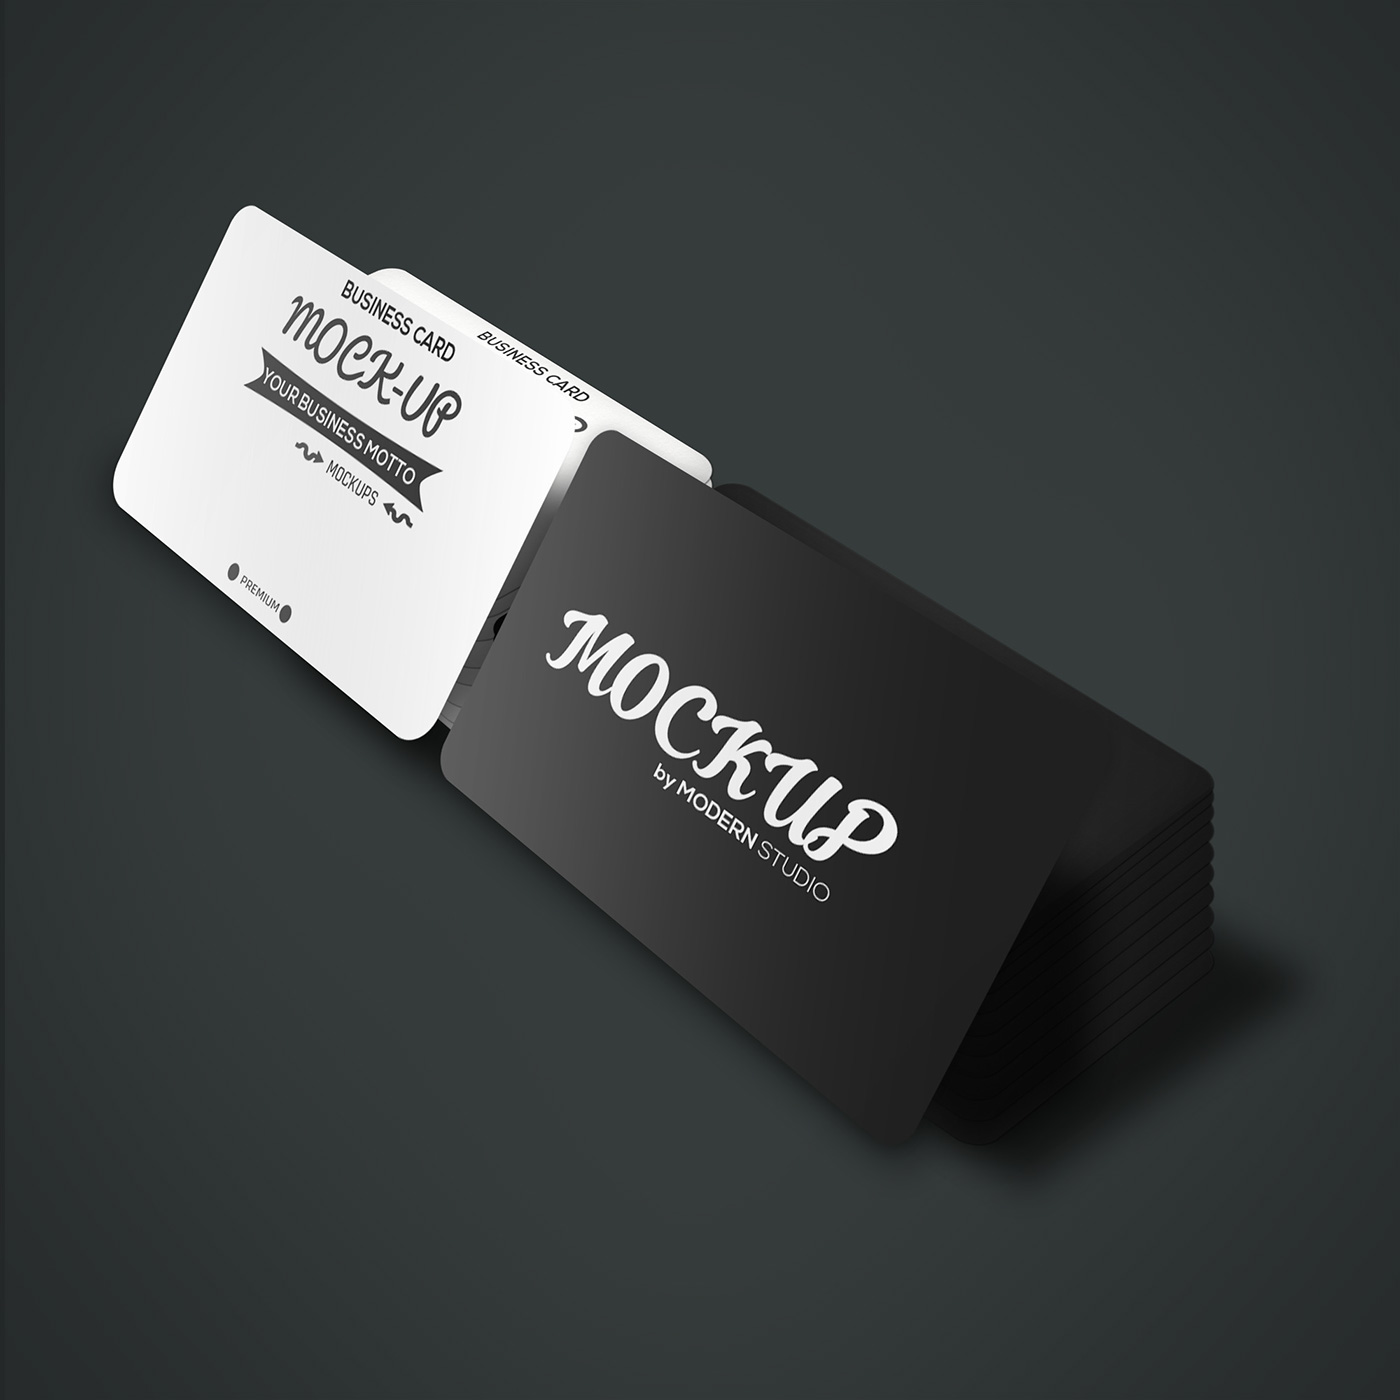 Mockup psd mockups realistic business card card black Smart object photoshop Illustrator mehran shahid. Chowdhury